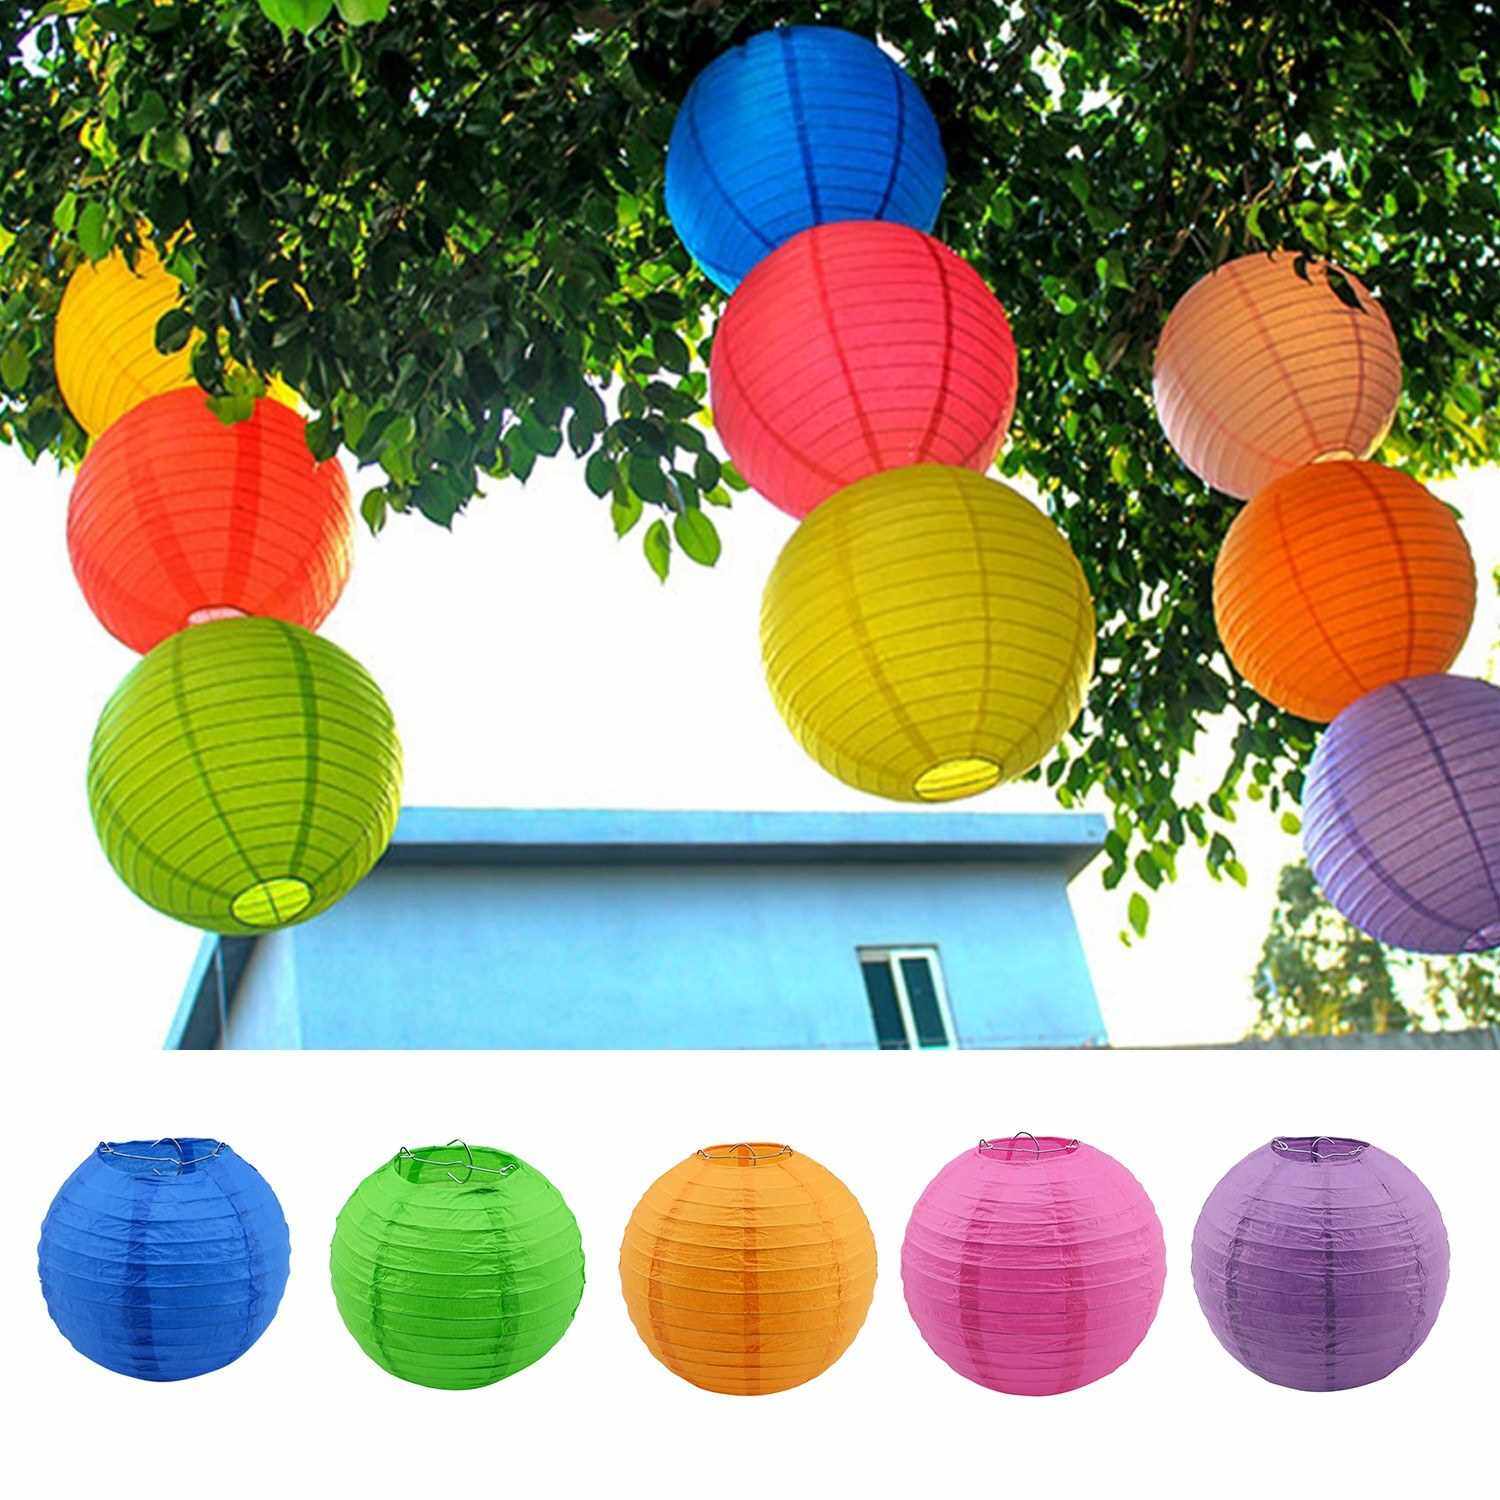 Paper Lanterns 8'' Outdoor Party Decorations Living Room Decor for Birthday Wedding(Orange) (Orange)